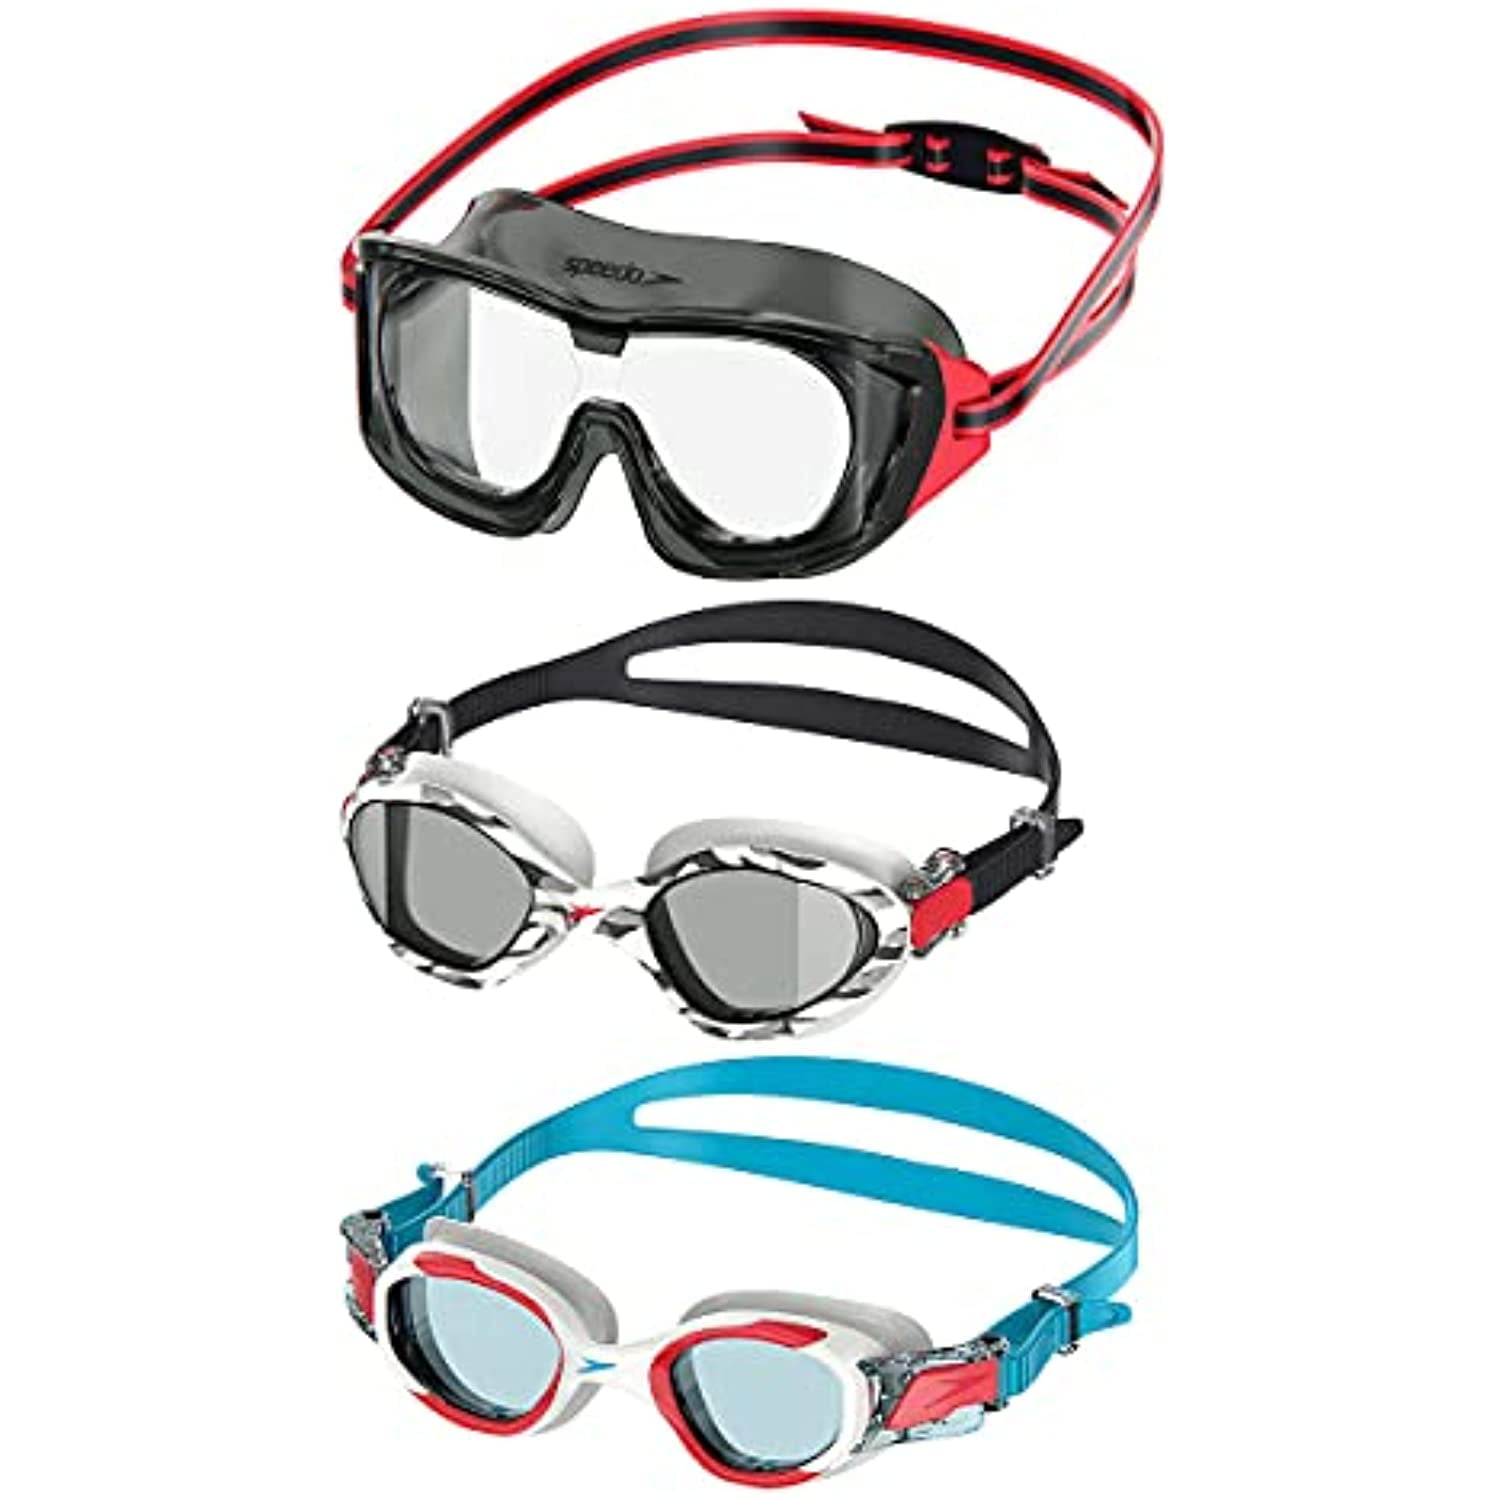 Free Shipping 3 Pack Of goggles SPEEDO SWIM GOGGLES Junior Kiwa NEW 